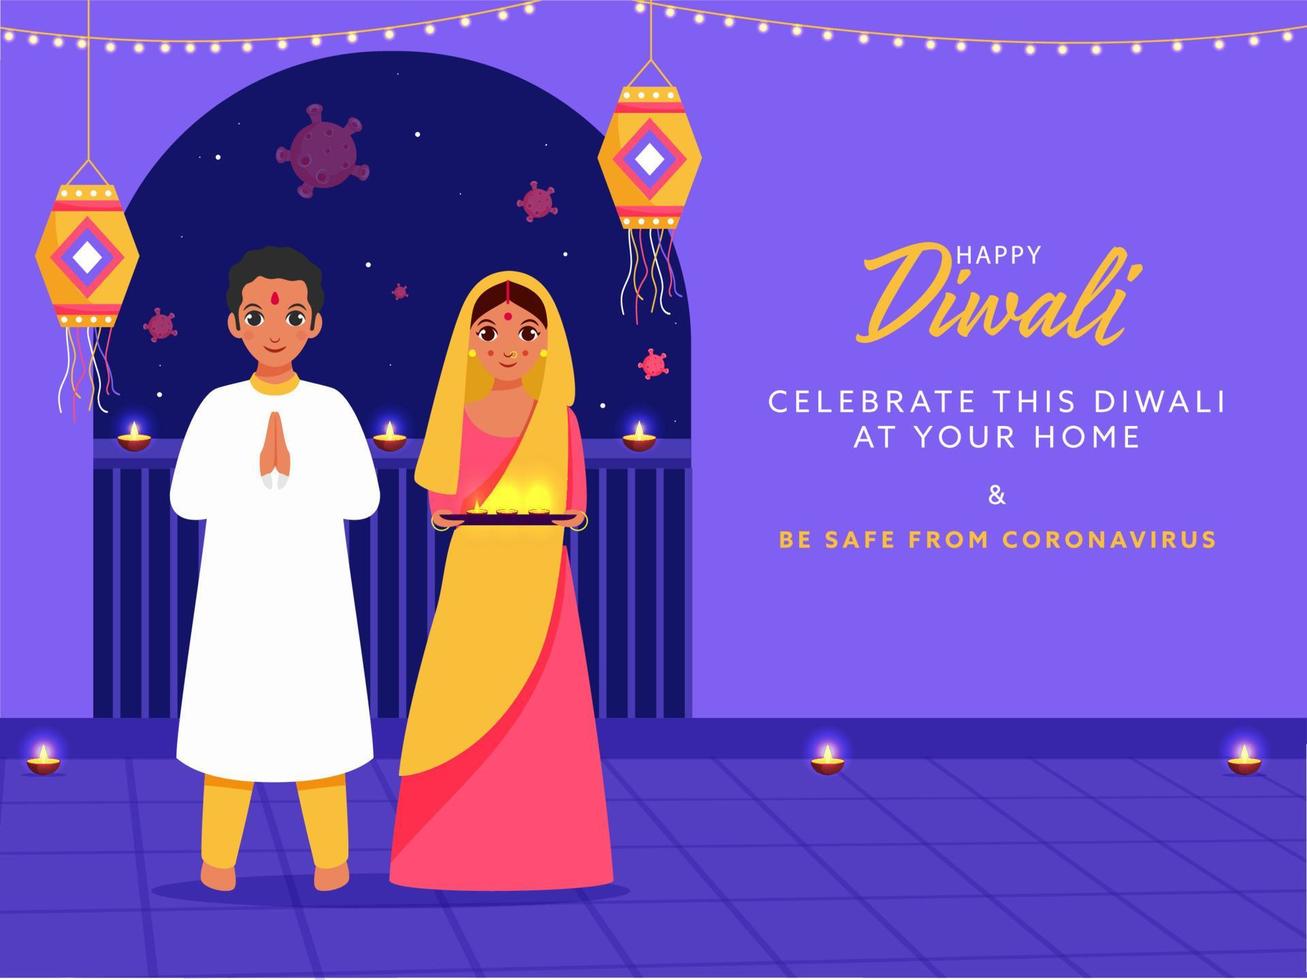 indio familia solicitando a celebrar diwali desde hogar porque de pandemia COVID-19. vector